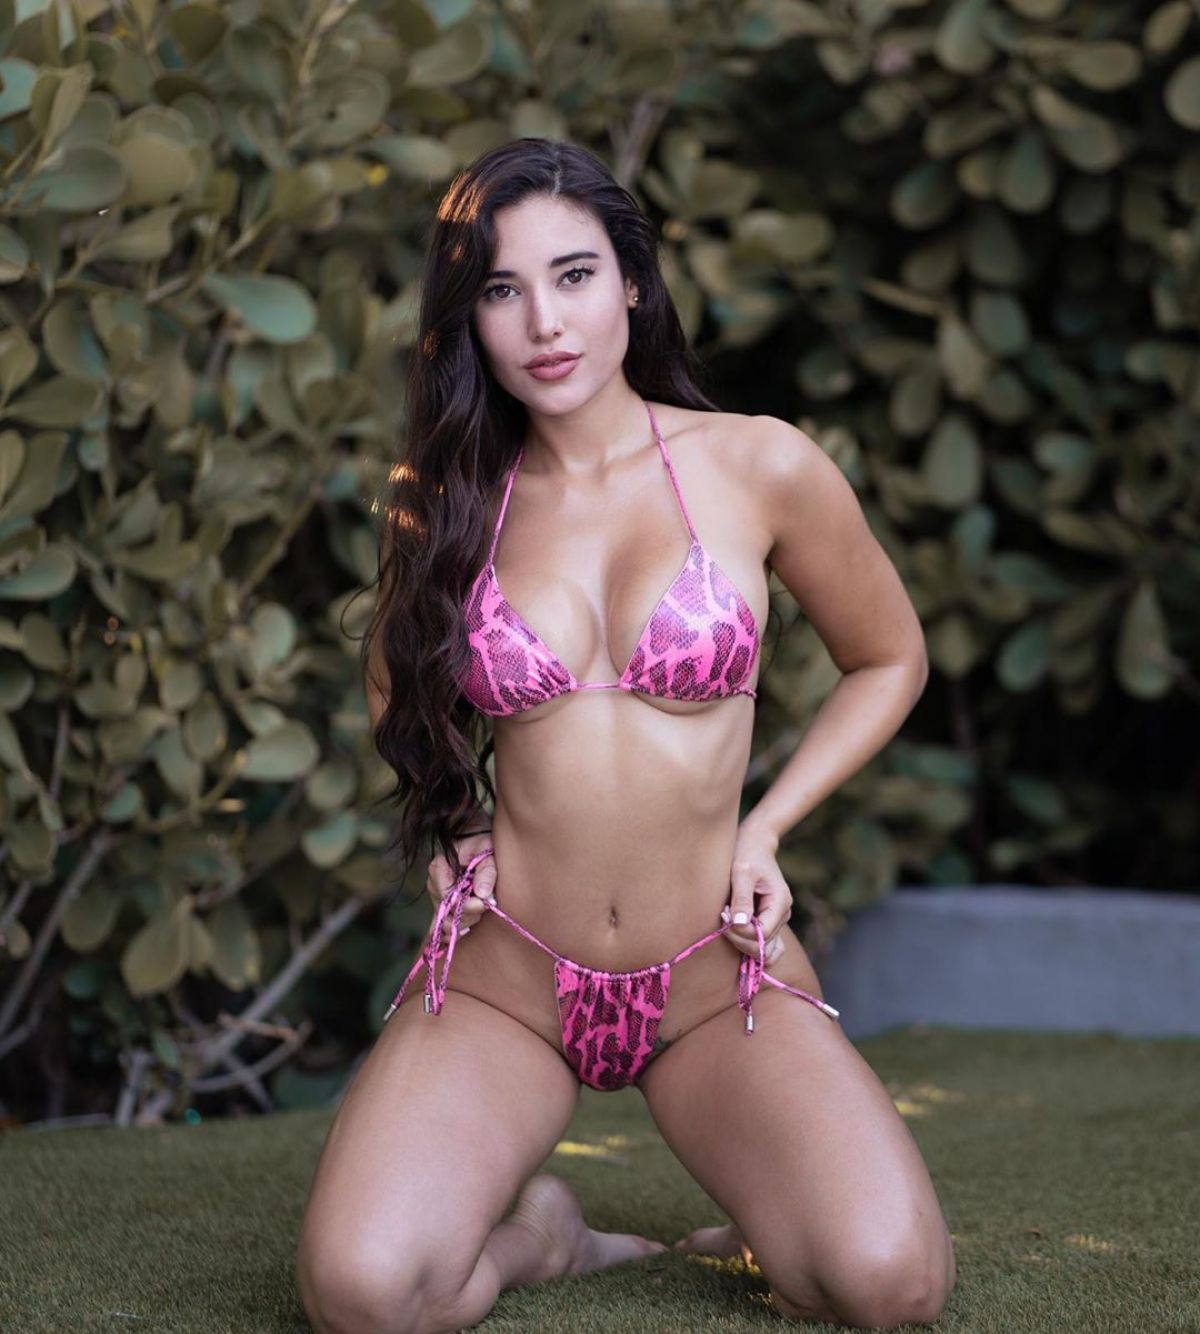 ANGIE VARONA in Bikini - Instagram Photos 05/17/2020 - HawtC